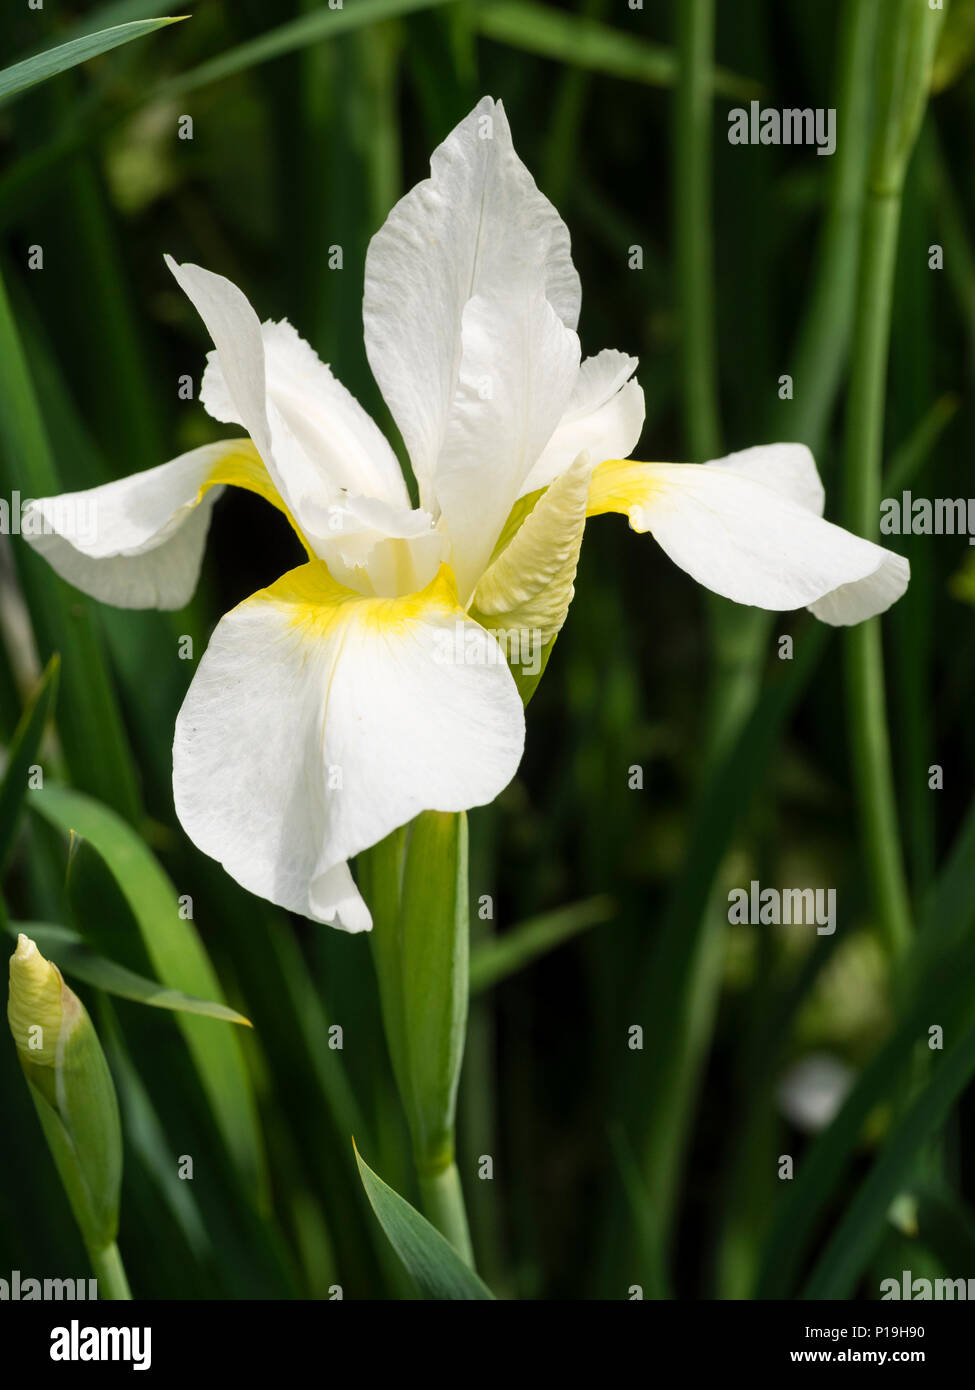 Yellow throated white flower of the hardy perennial Siberian iris, Iris sibirica 'White Swirl', flowering in early summer Stock Photo